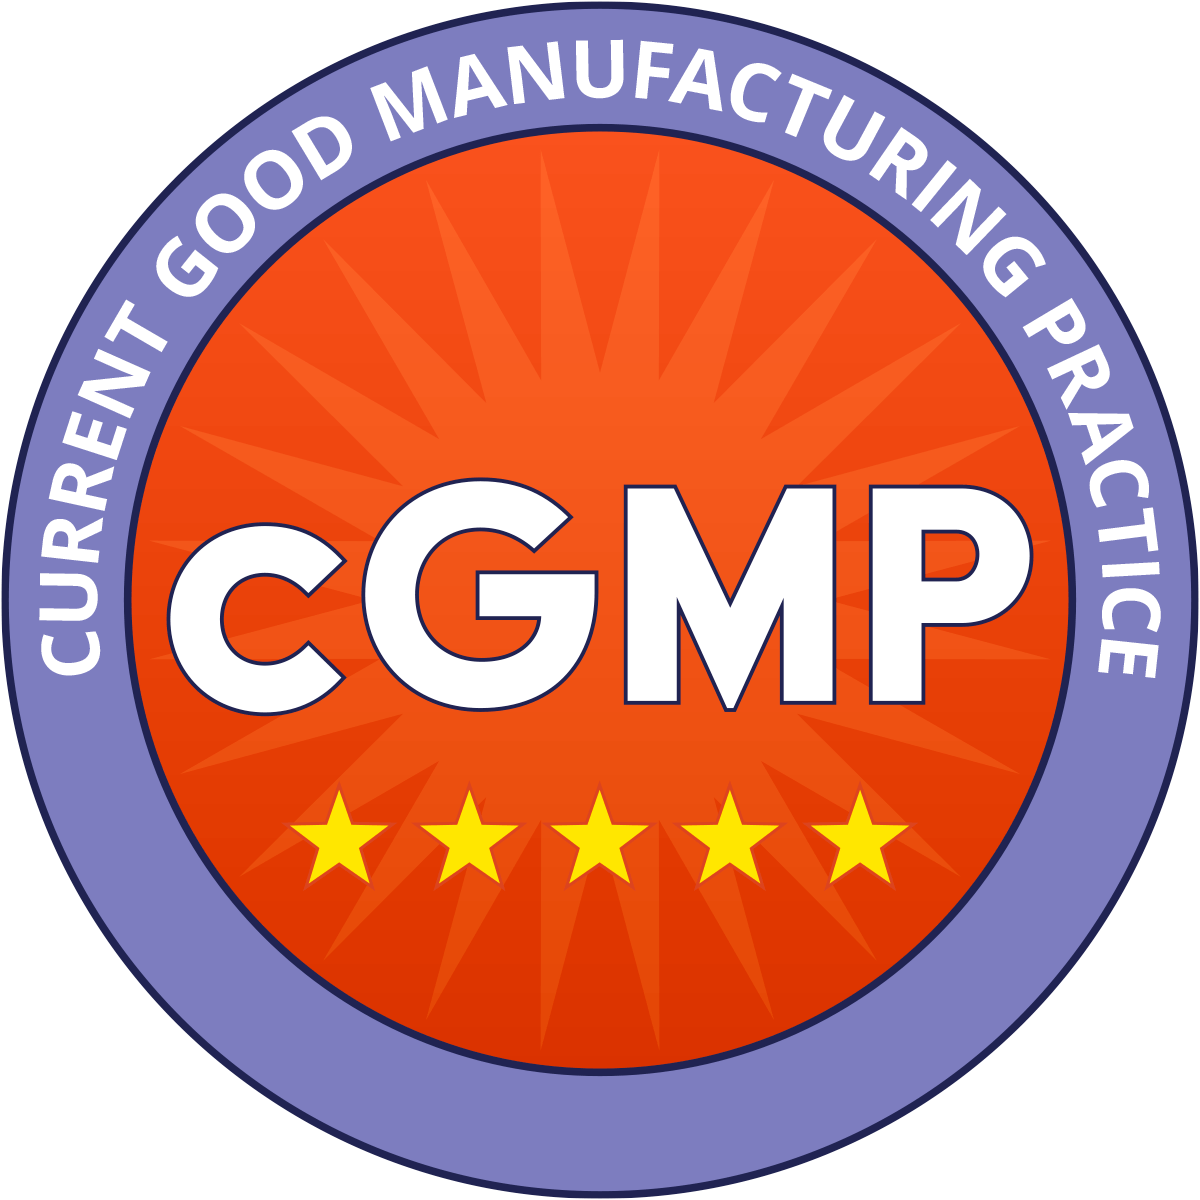 CGMP regulations